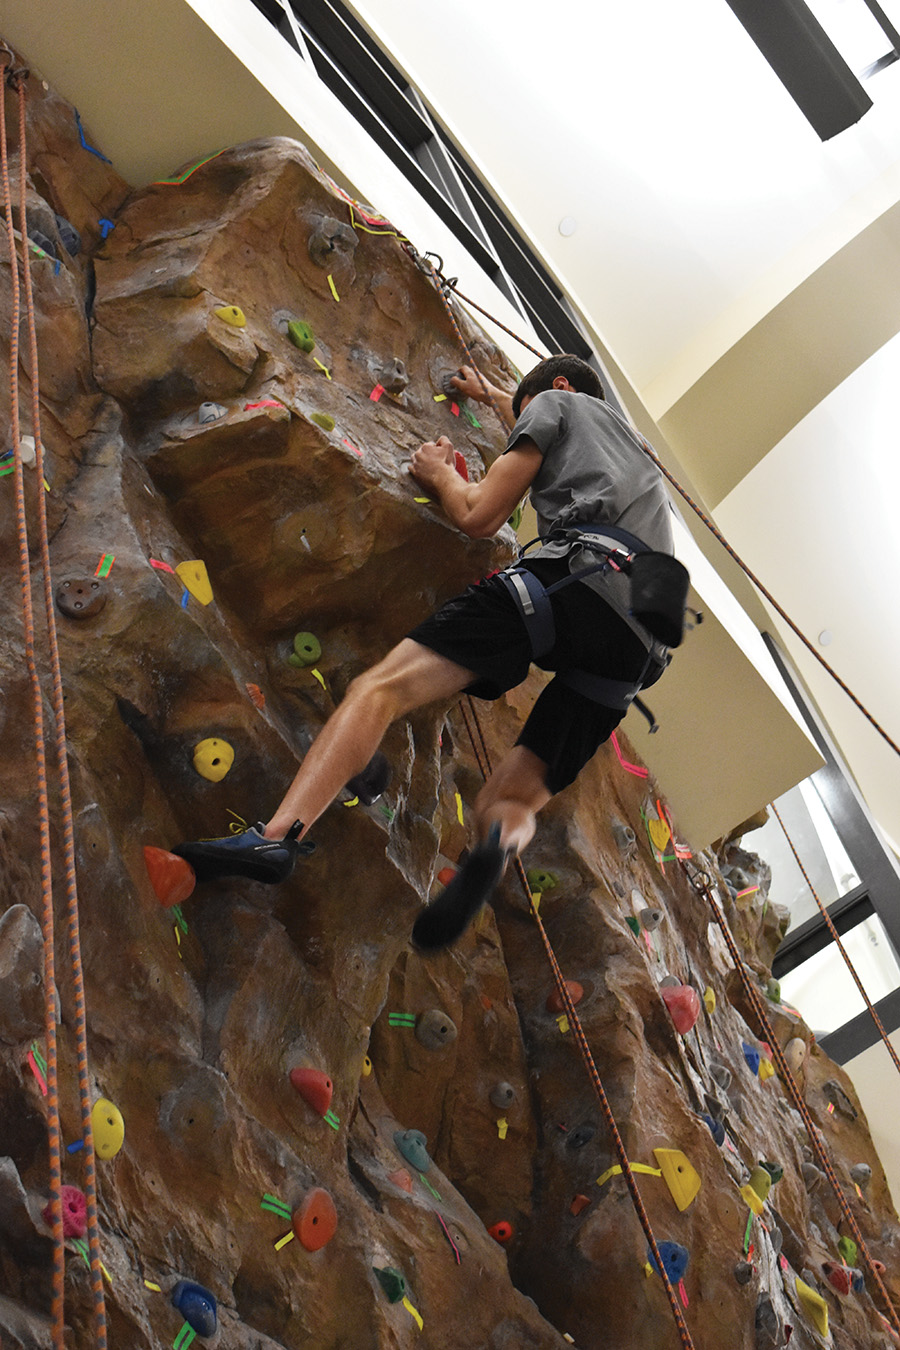 Student climbing up the climbing wall.